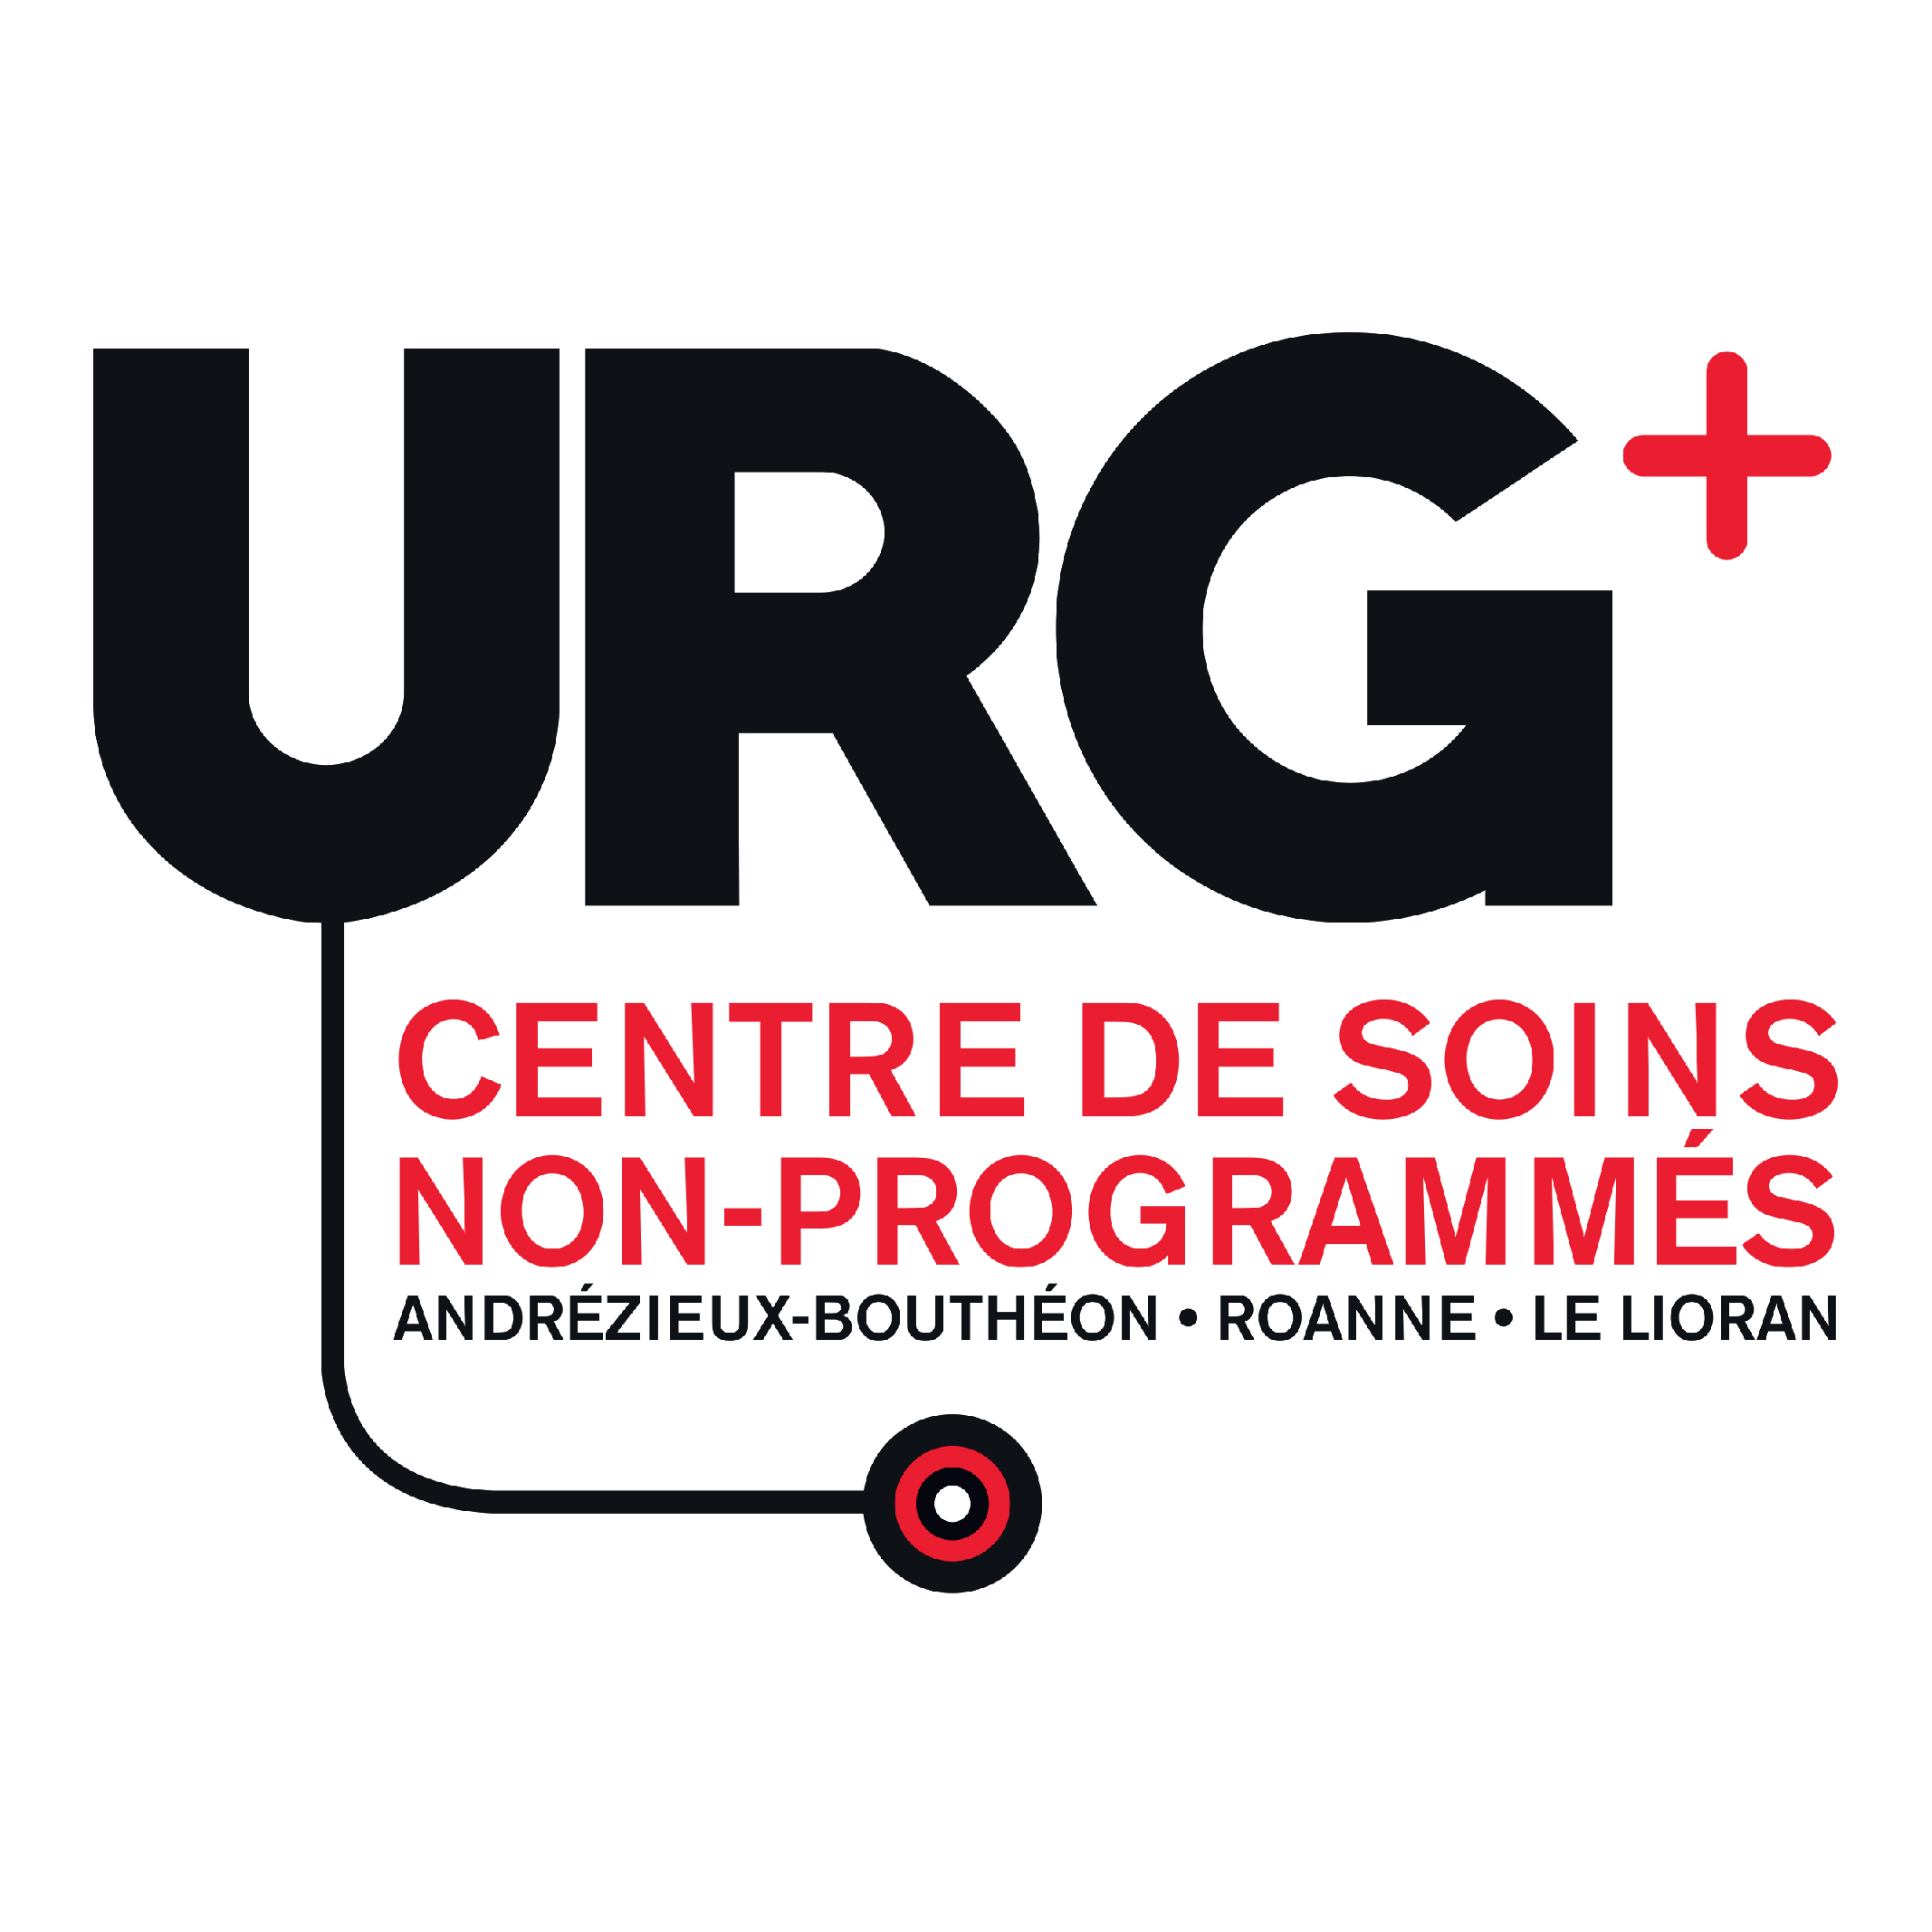 Logo URG+